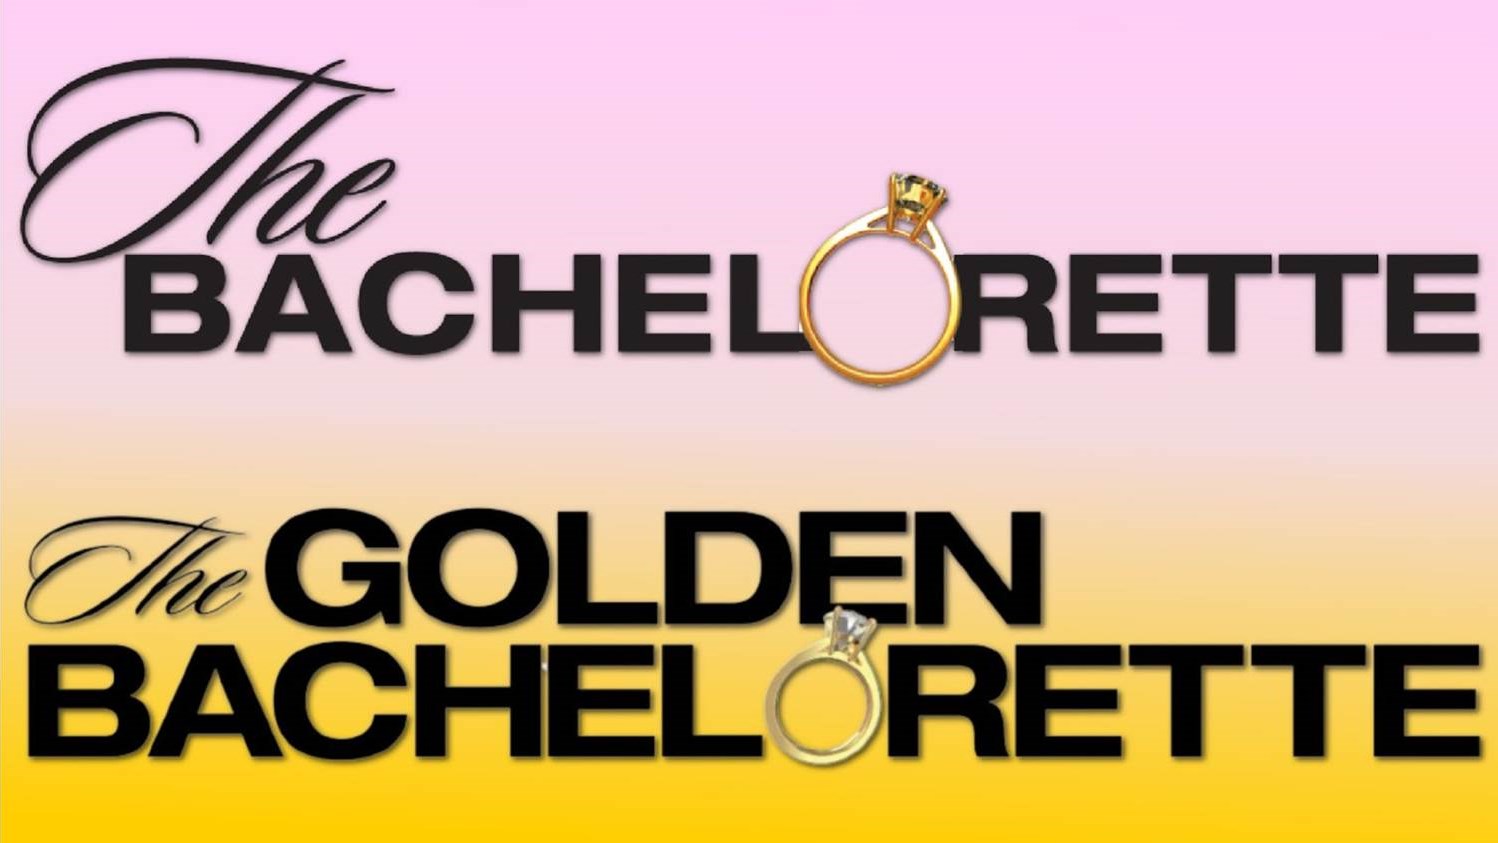 The Golden Bachelorette Guide